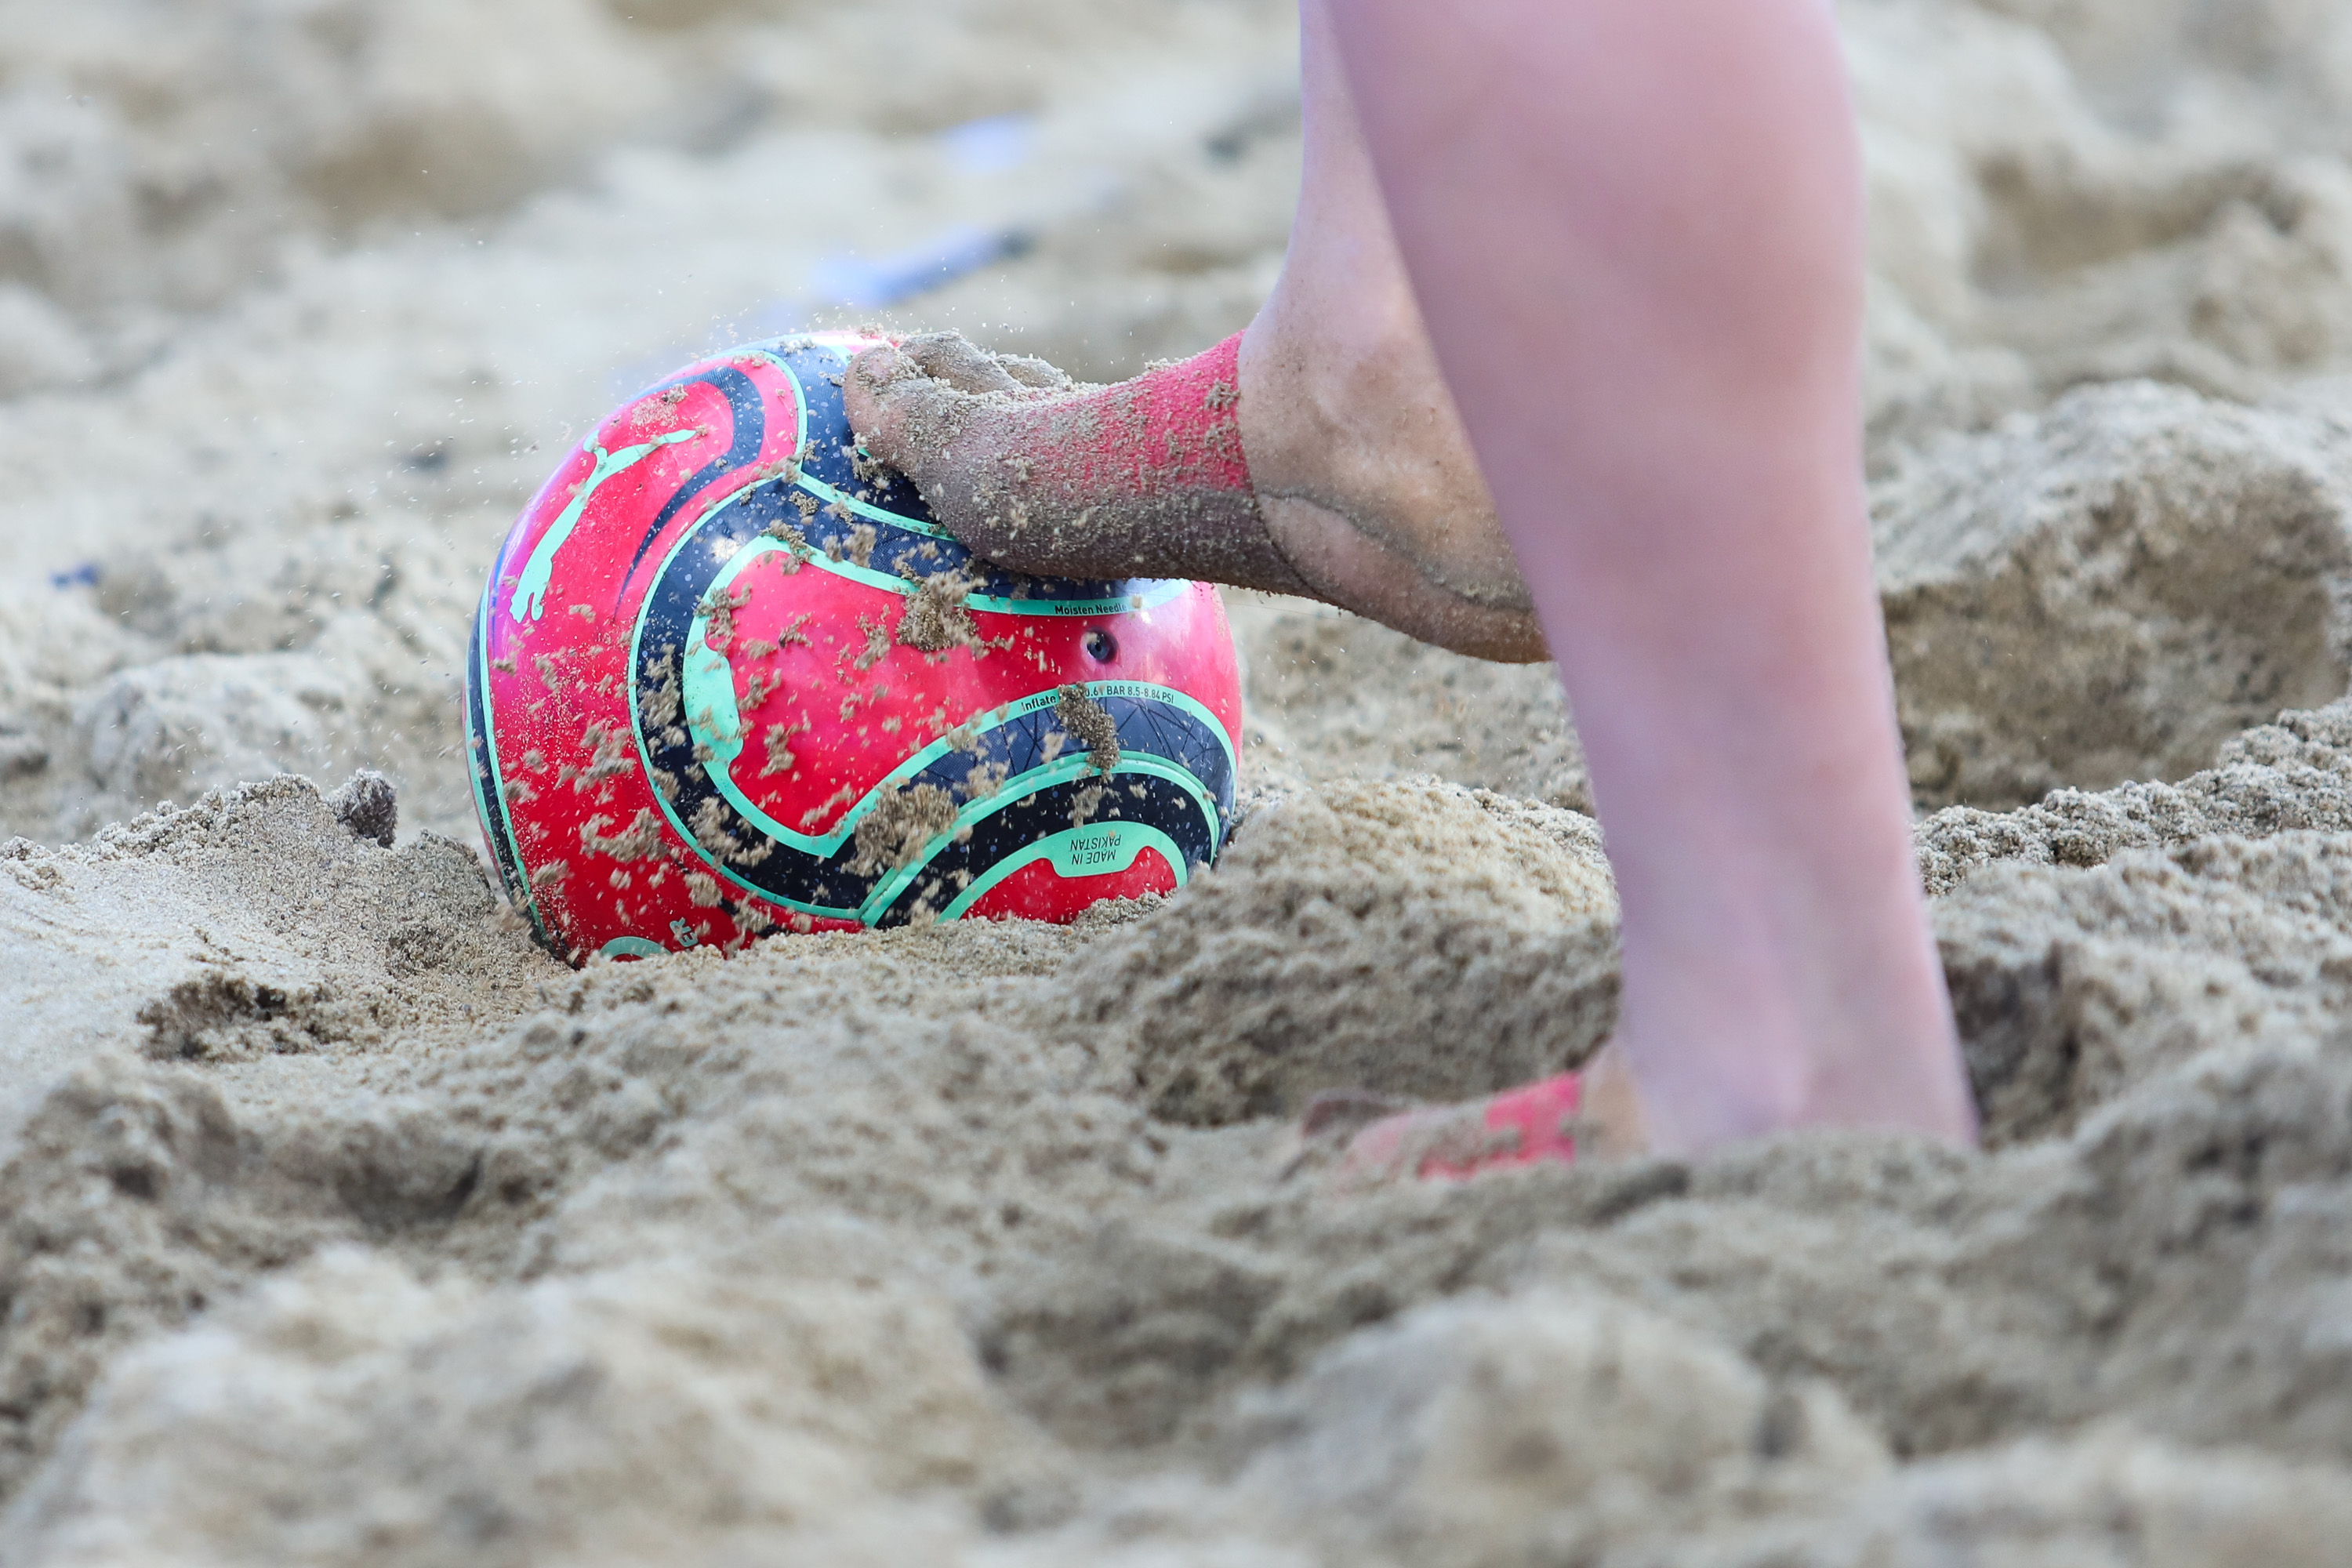 Friday will determine semi-finalists in beach soccer tournaments